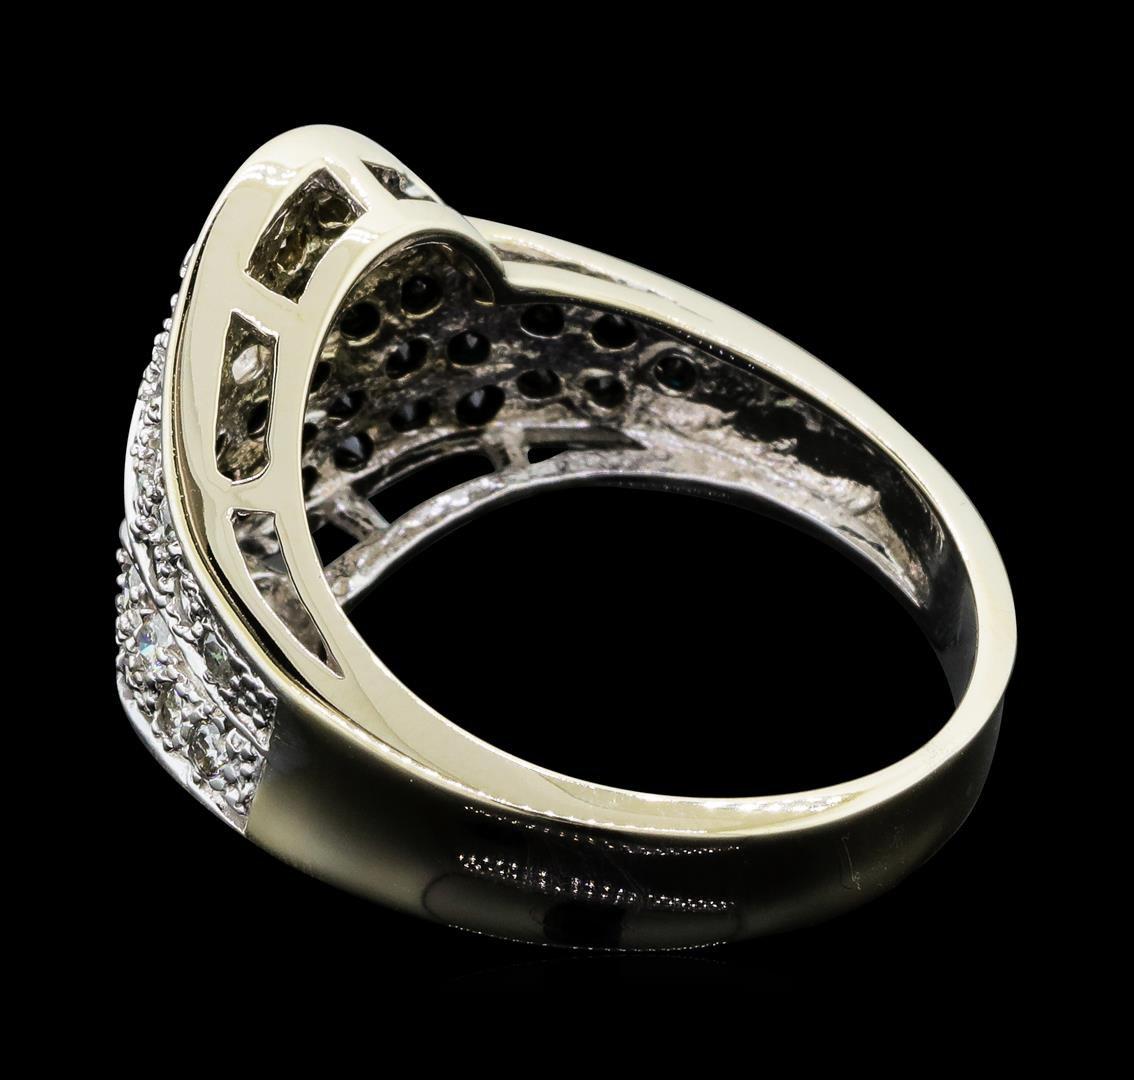 0.90 ctw White and Black Diamond Ring - 14KT White Gold